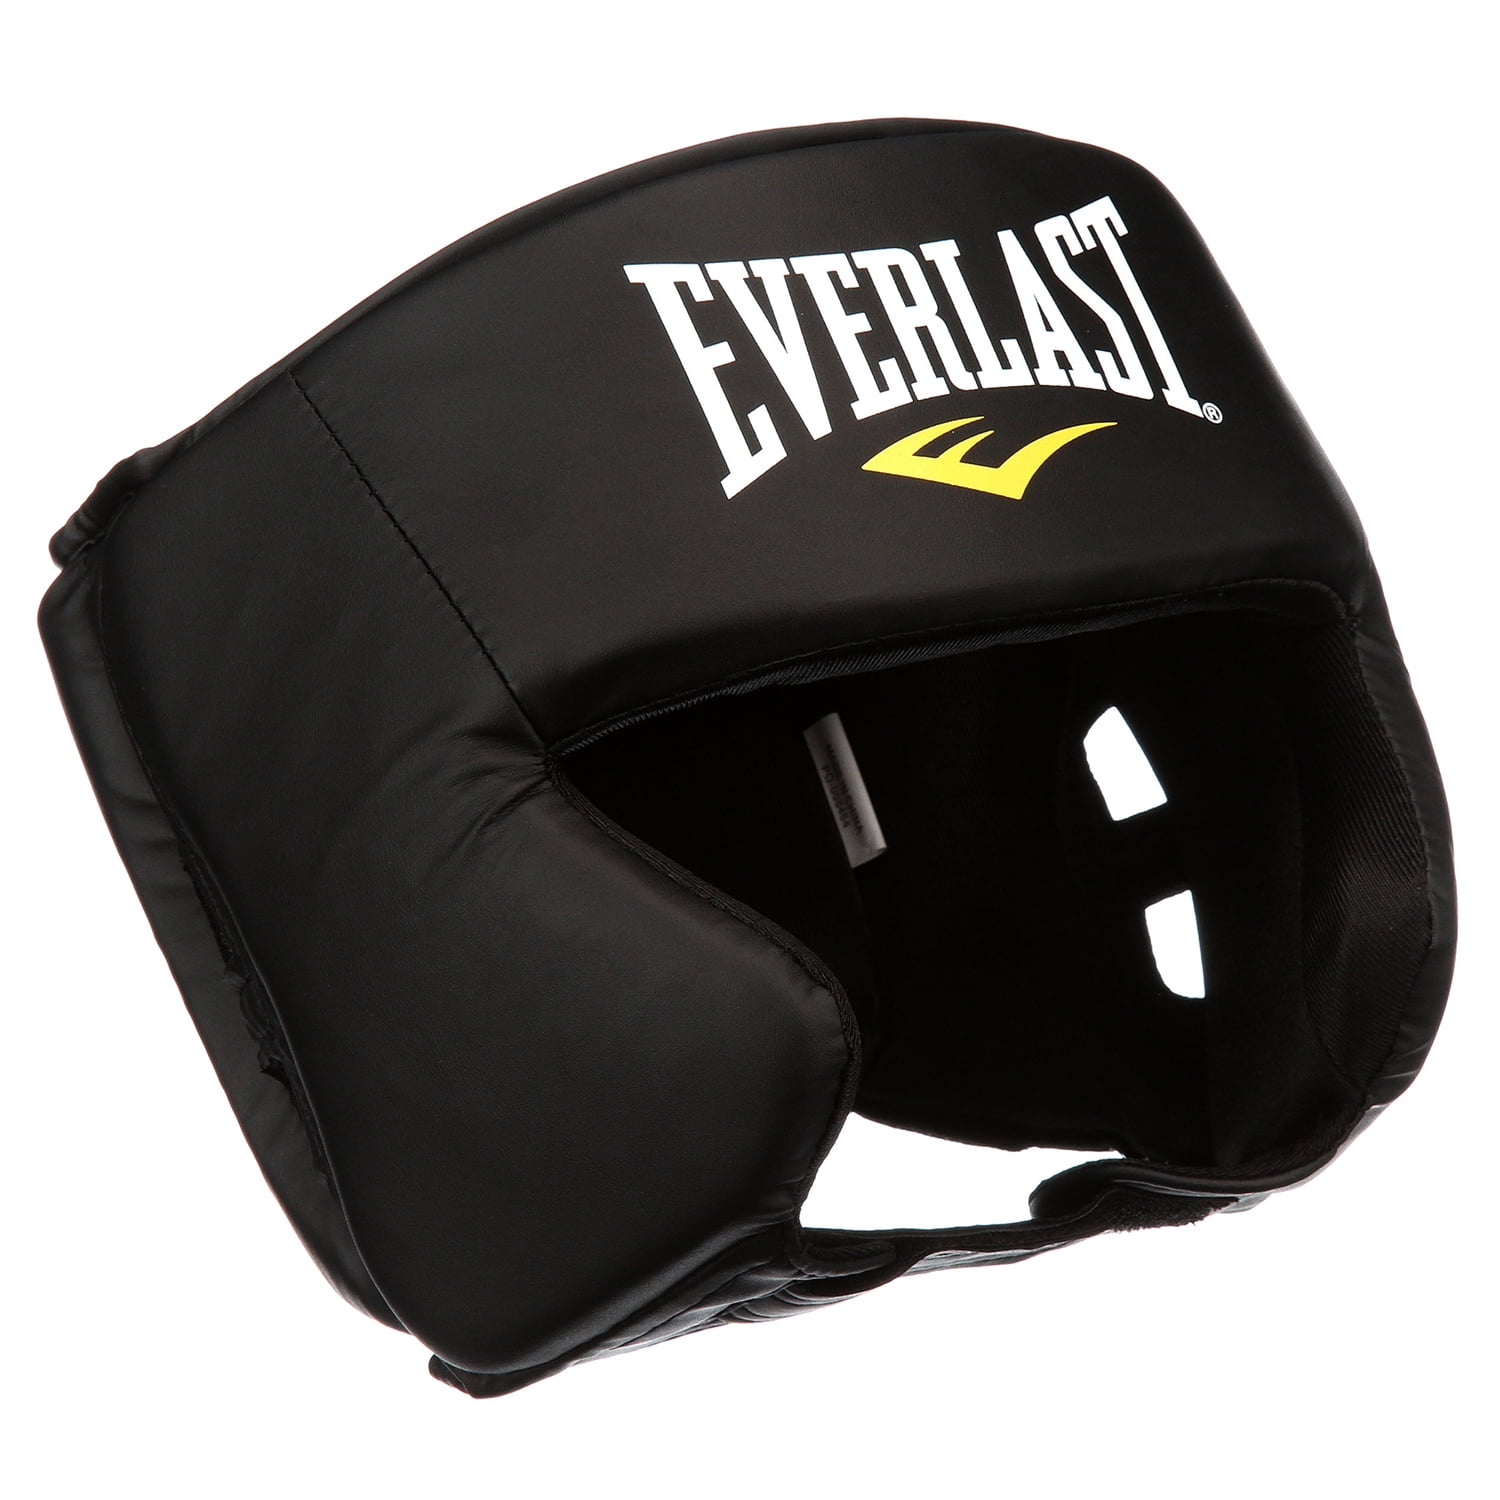 Everlast Model 4022 Everfresh Level II Boxing Head Gear in Bag for sale online 